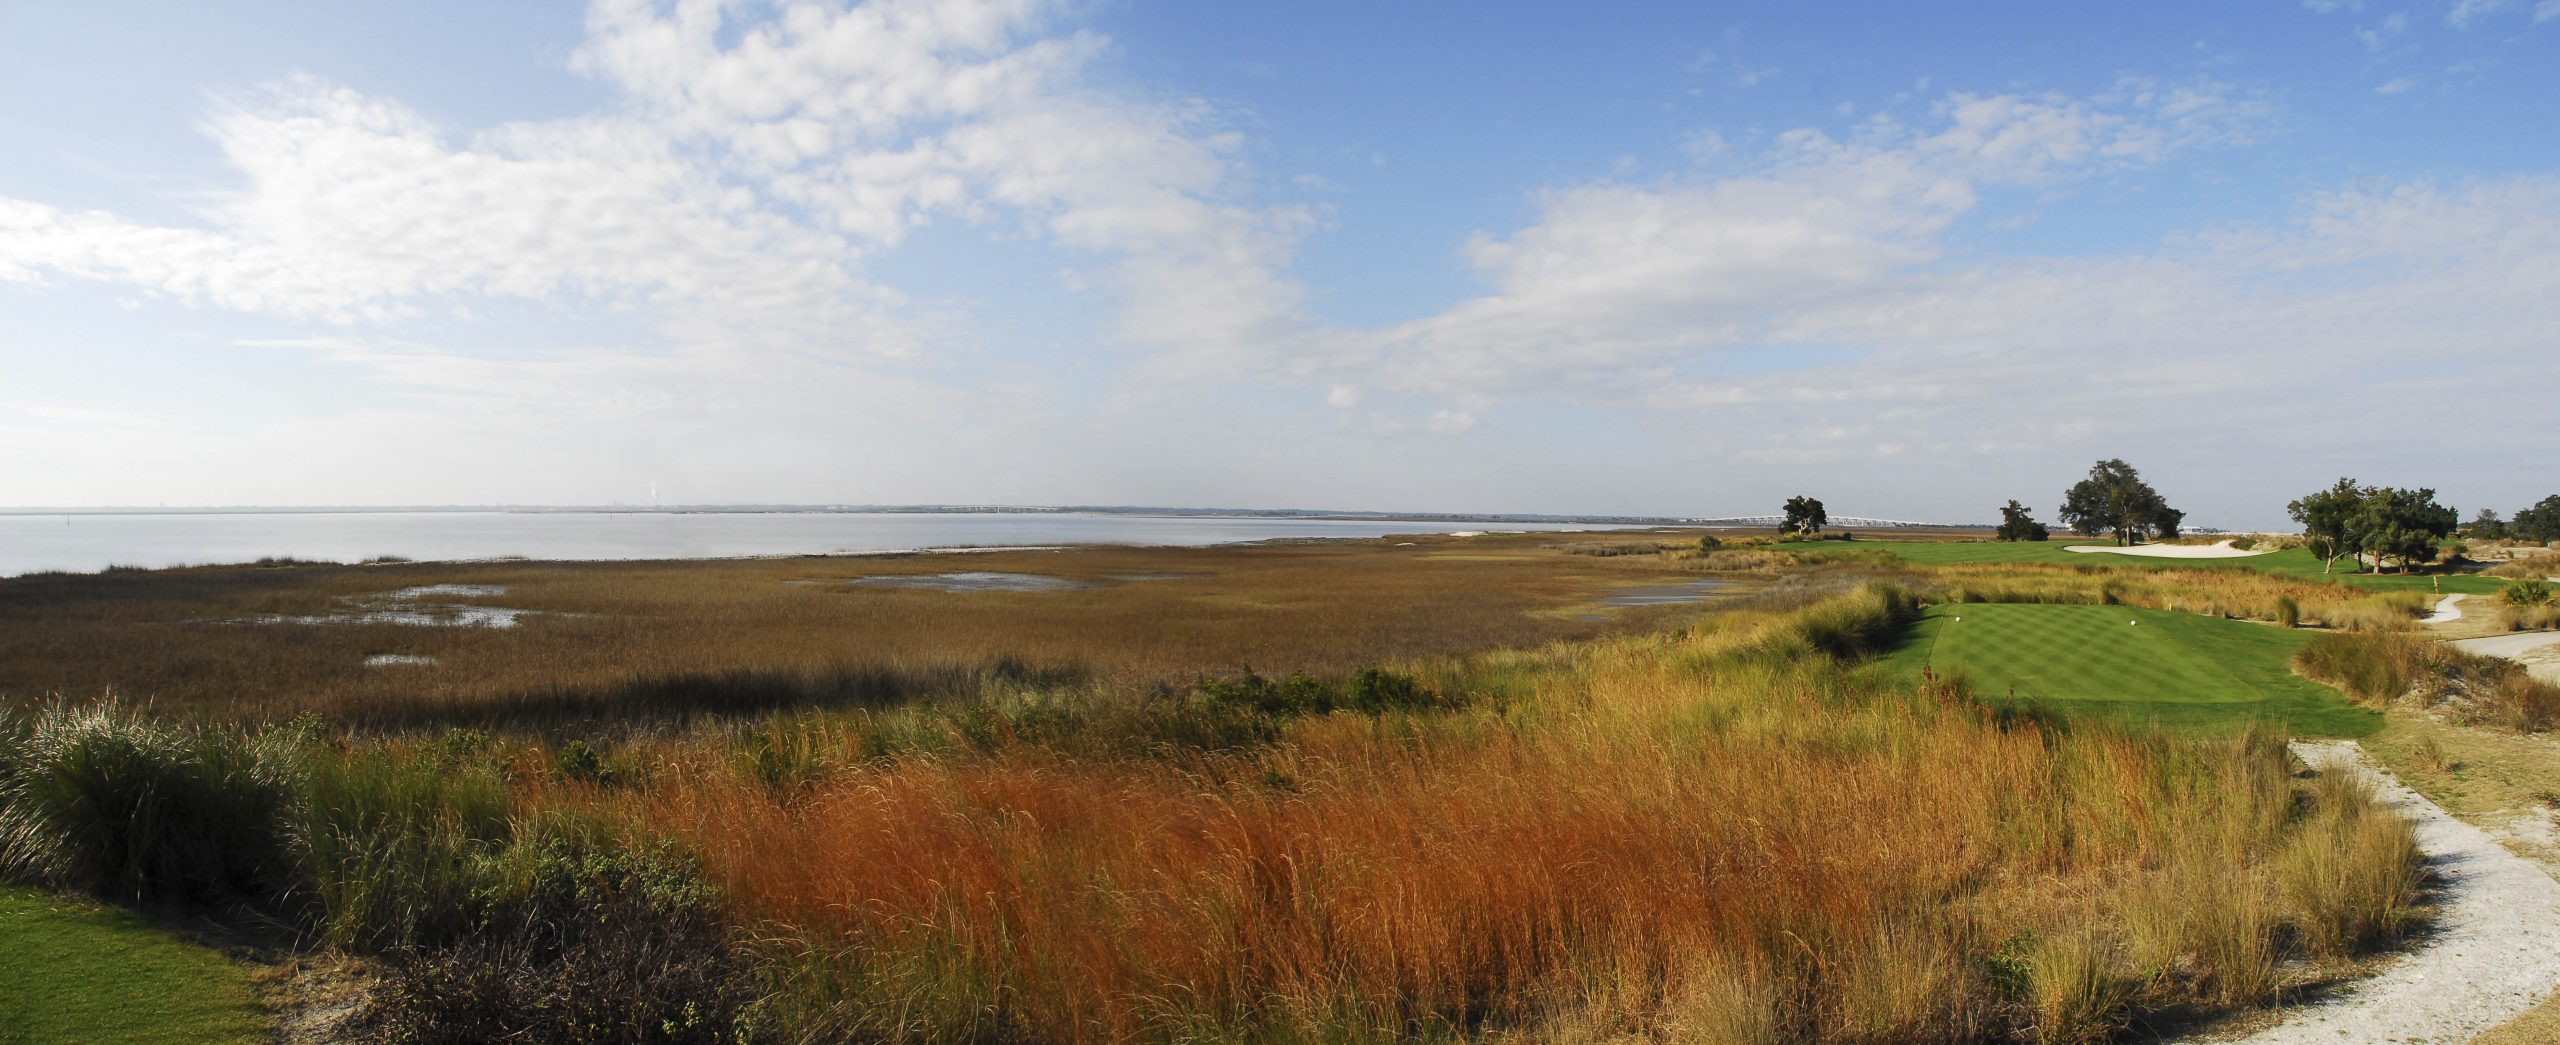 Coastal marshland at Sea Island